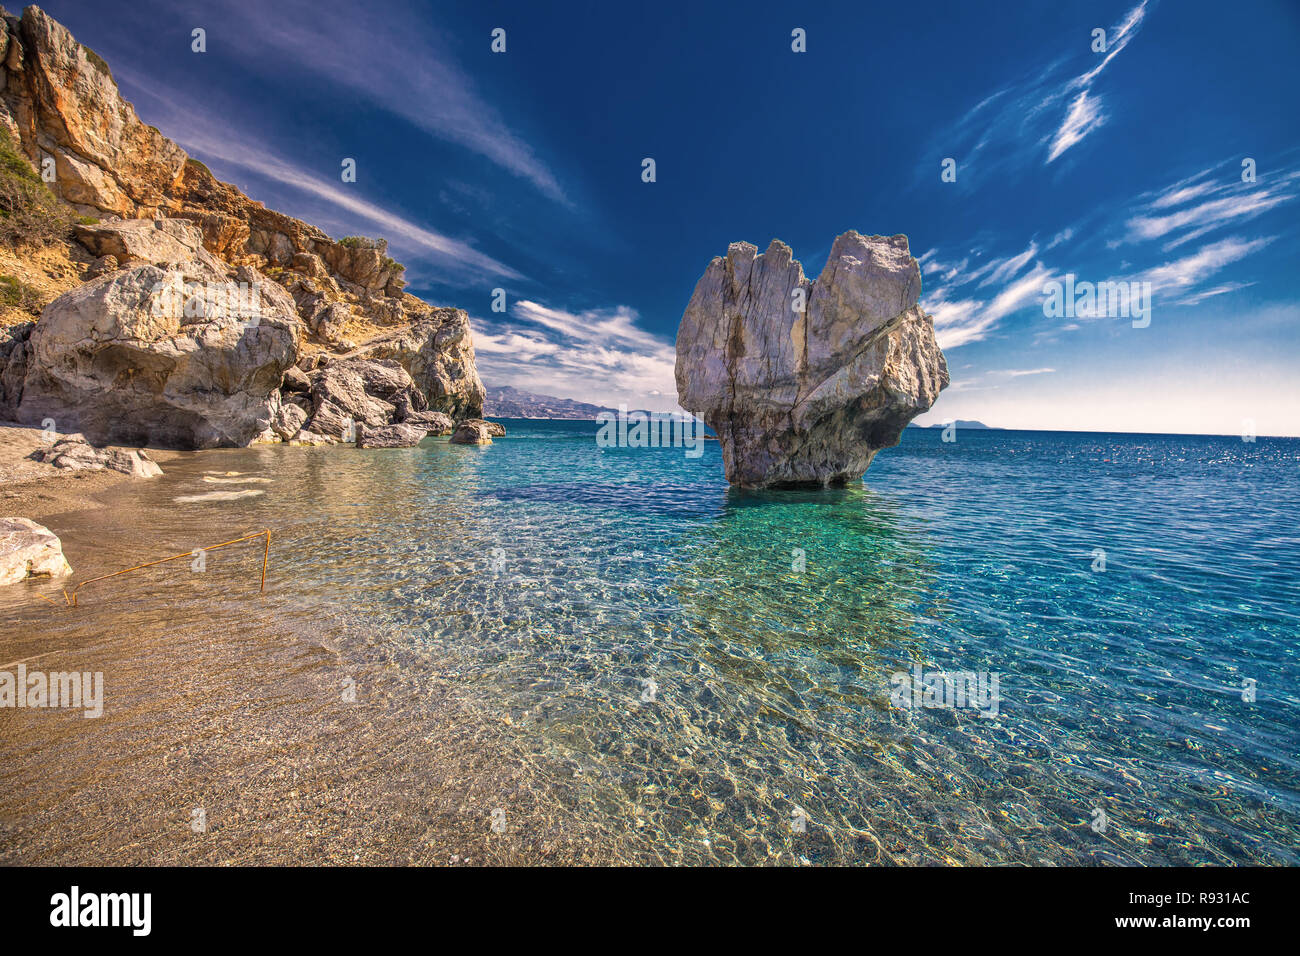 Herzförmige Stein am Strand Preveli, Kreta, Griechenland, Europa. Stockfoto